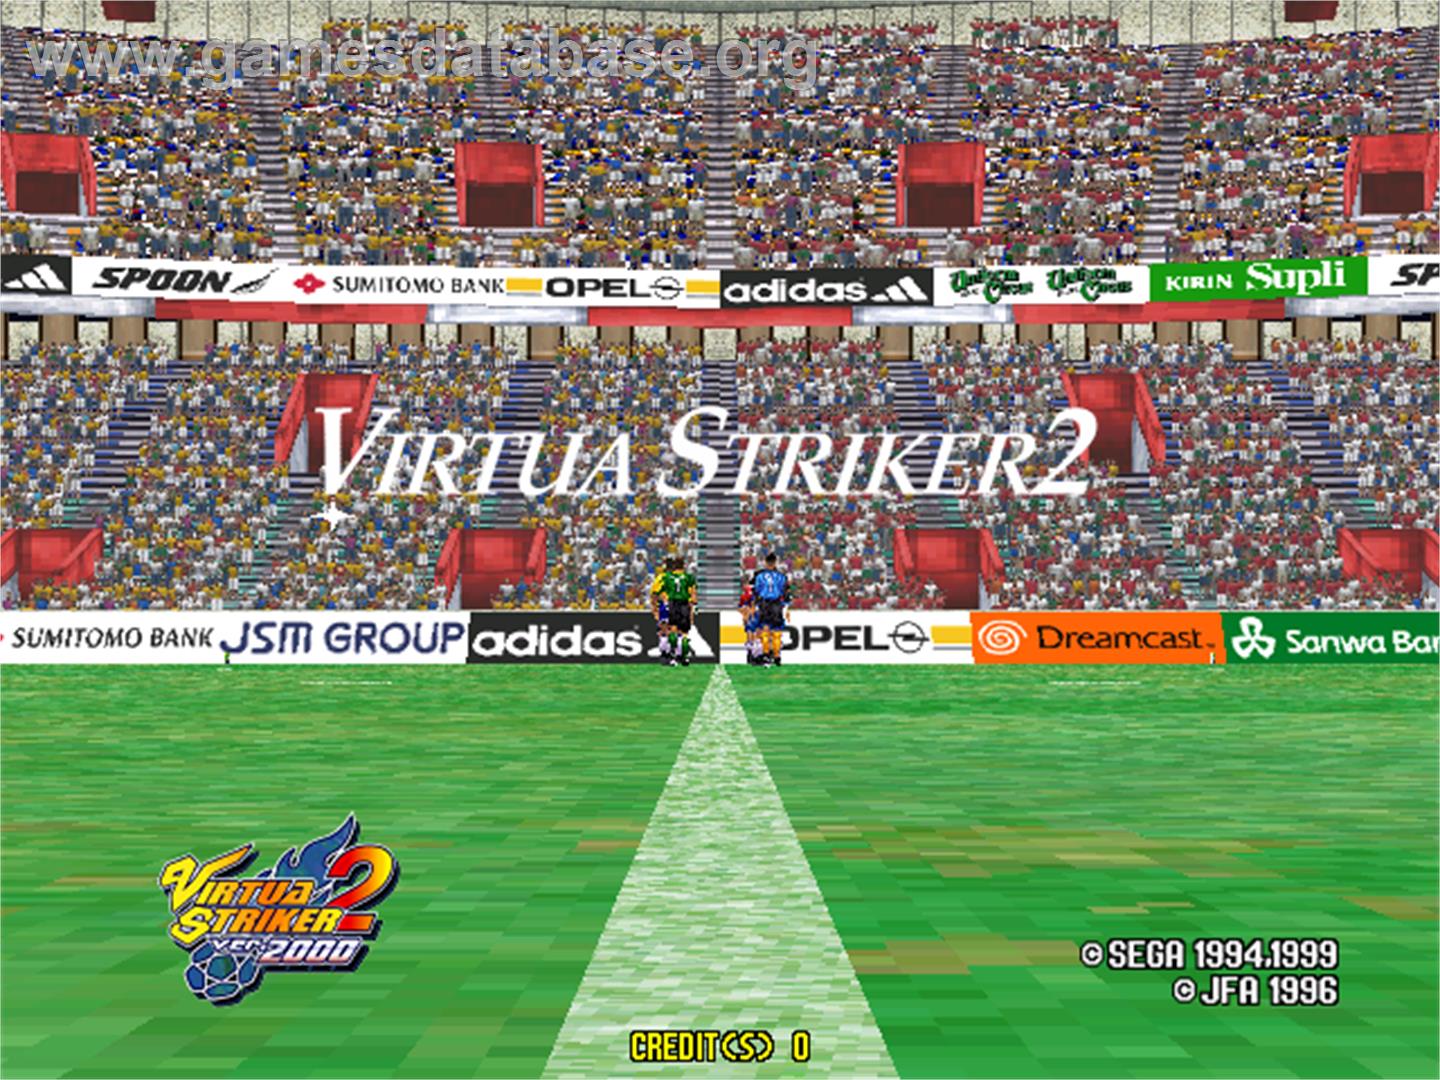 Virtua Striker 2 Ver. 2000 - Arcade - Artwork - Title Screen